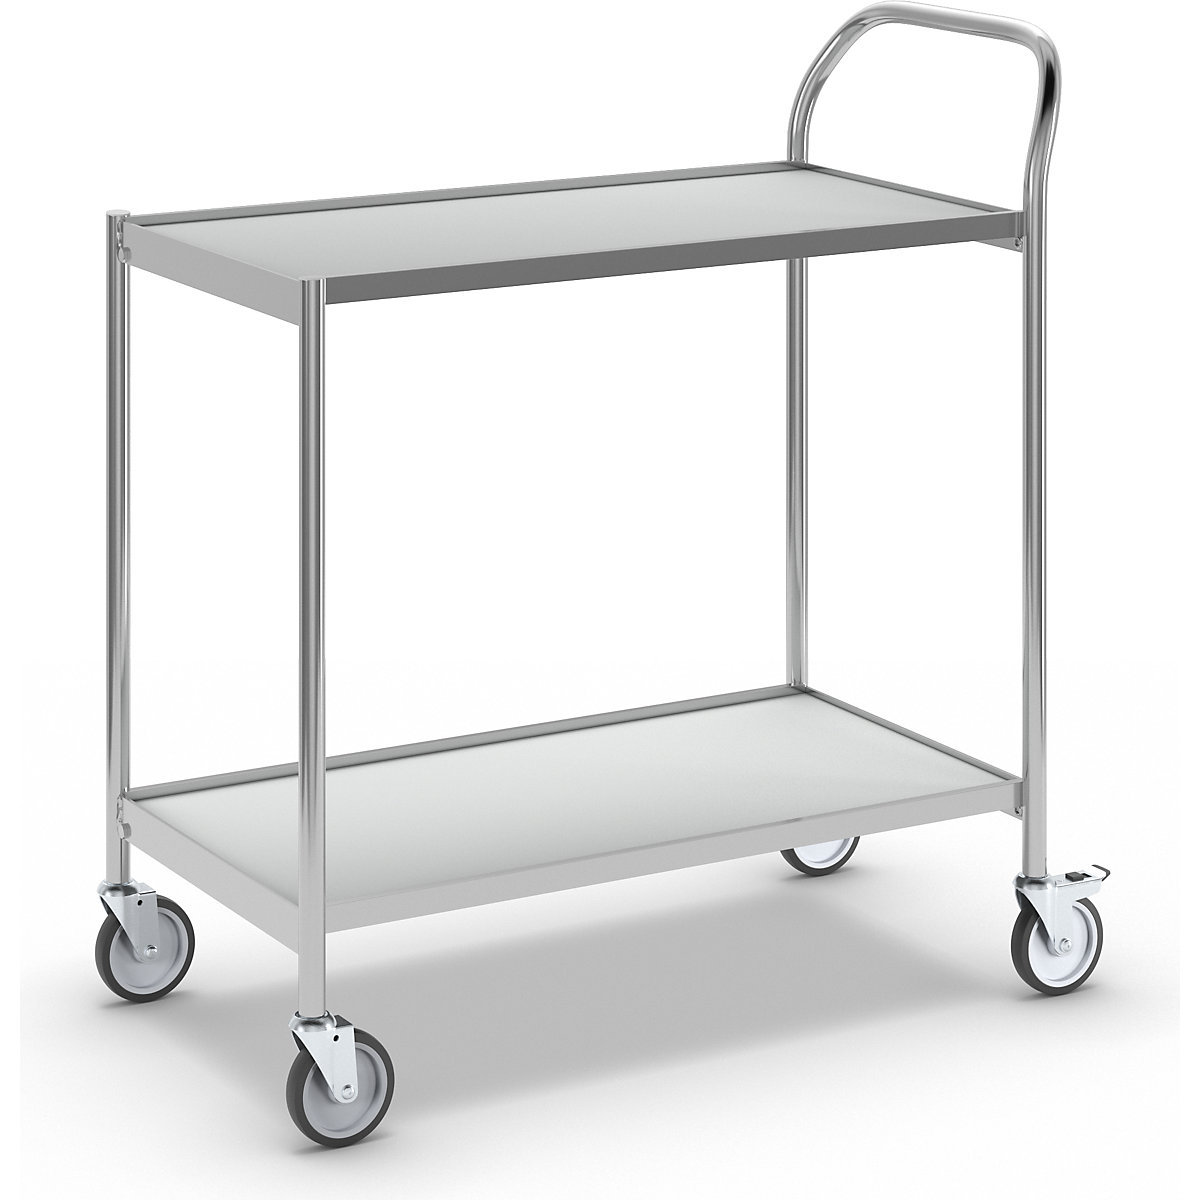 Stolový vozík – HelgeNyberg, 2 etáže, d x š 800 x 420 mm, chrom / šedá-1